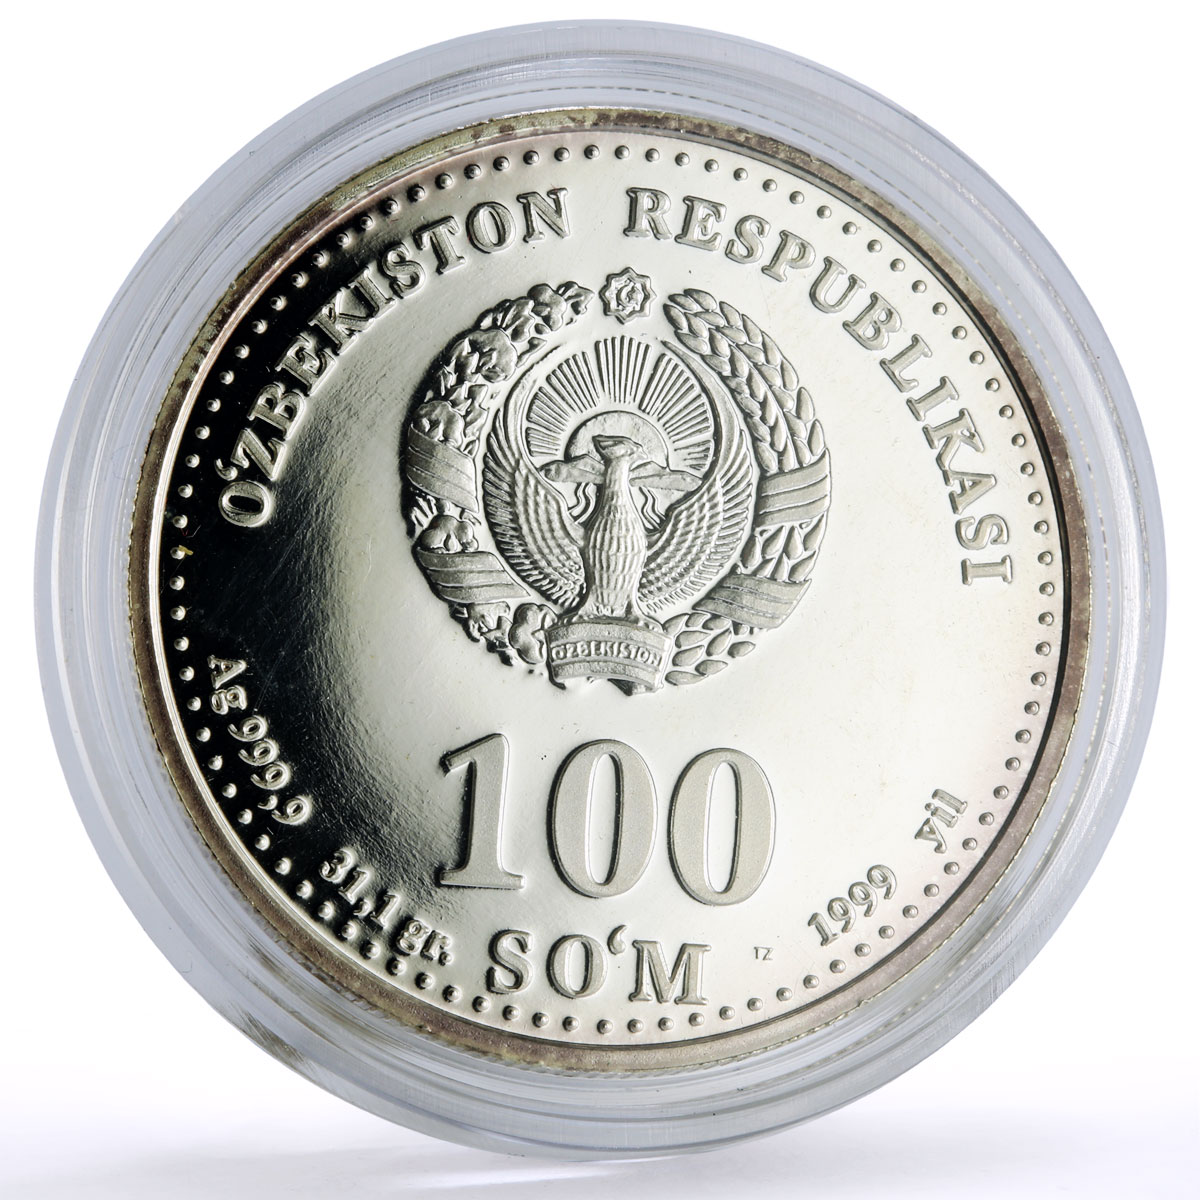 Uzbekistan 100 som Great Ancestors Sultan Bobur proof silver coin 1999